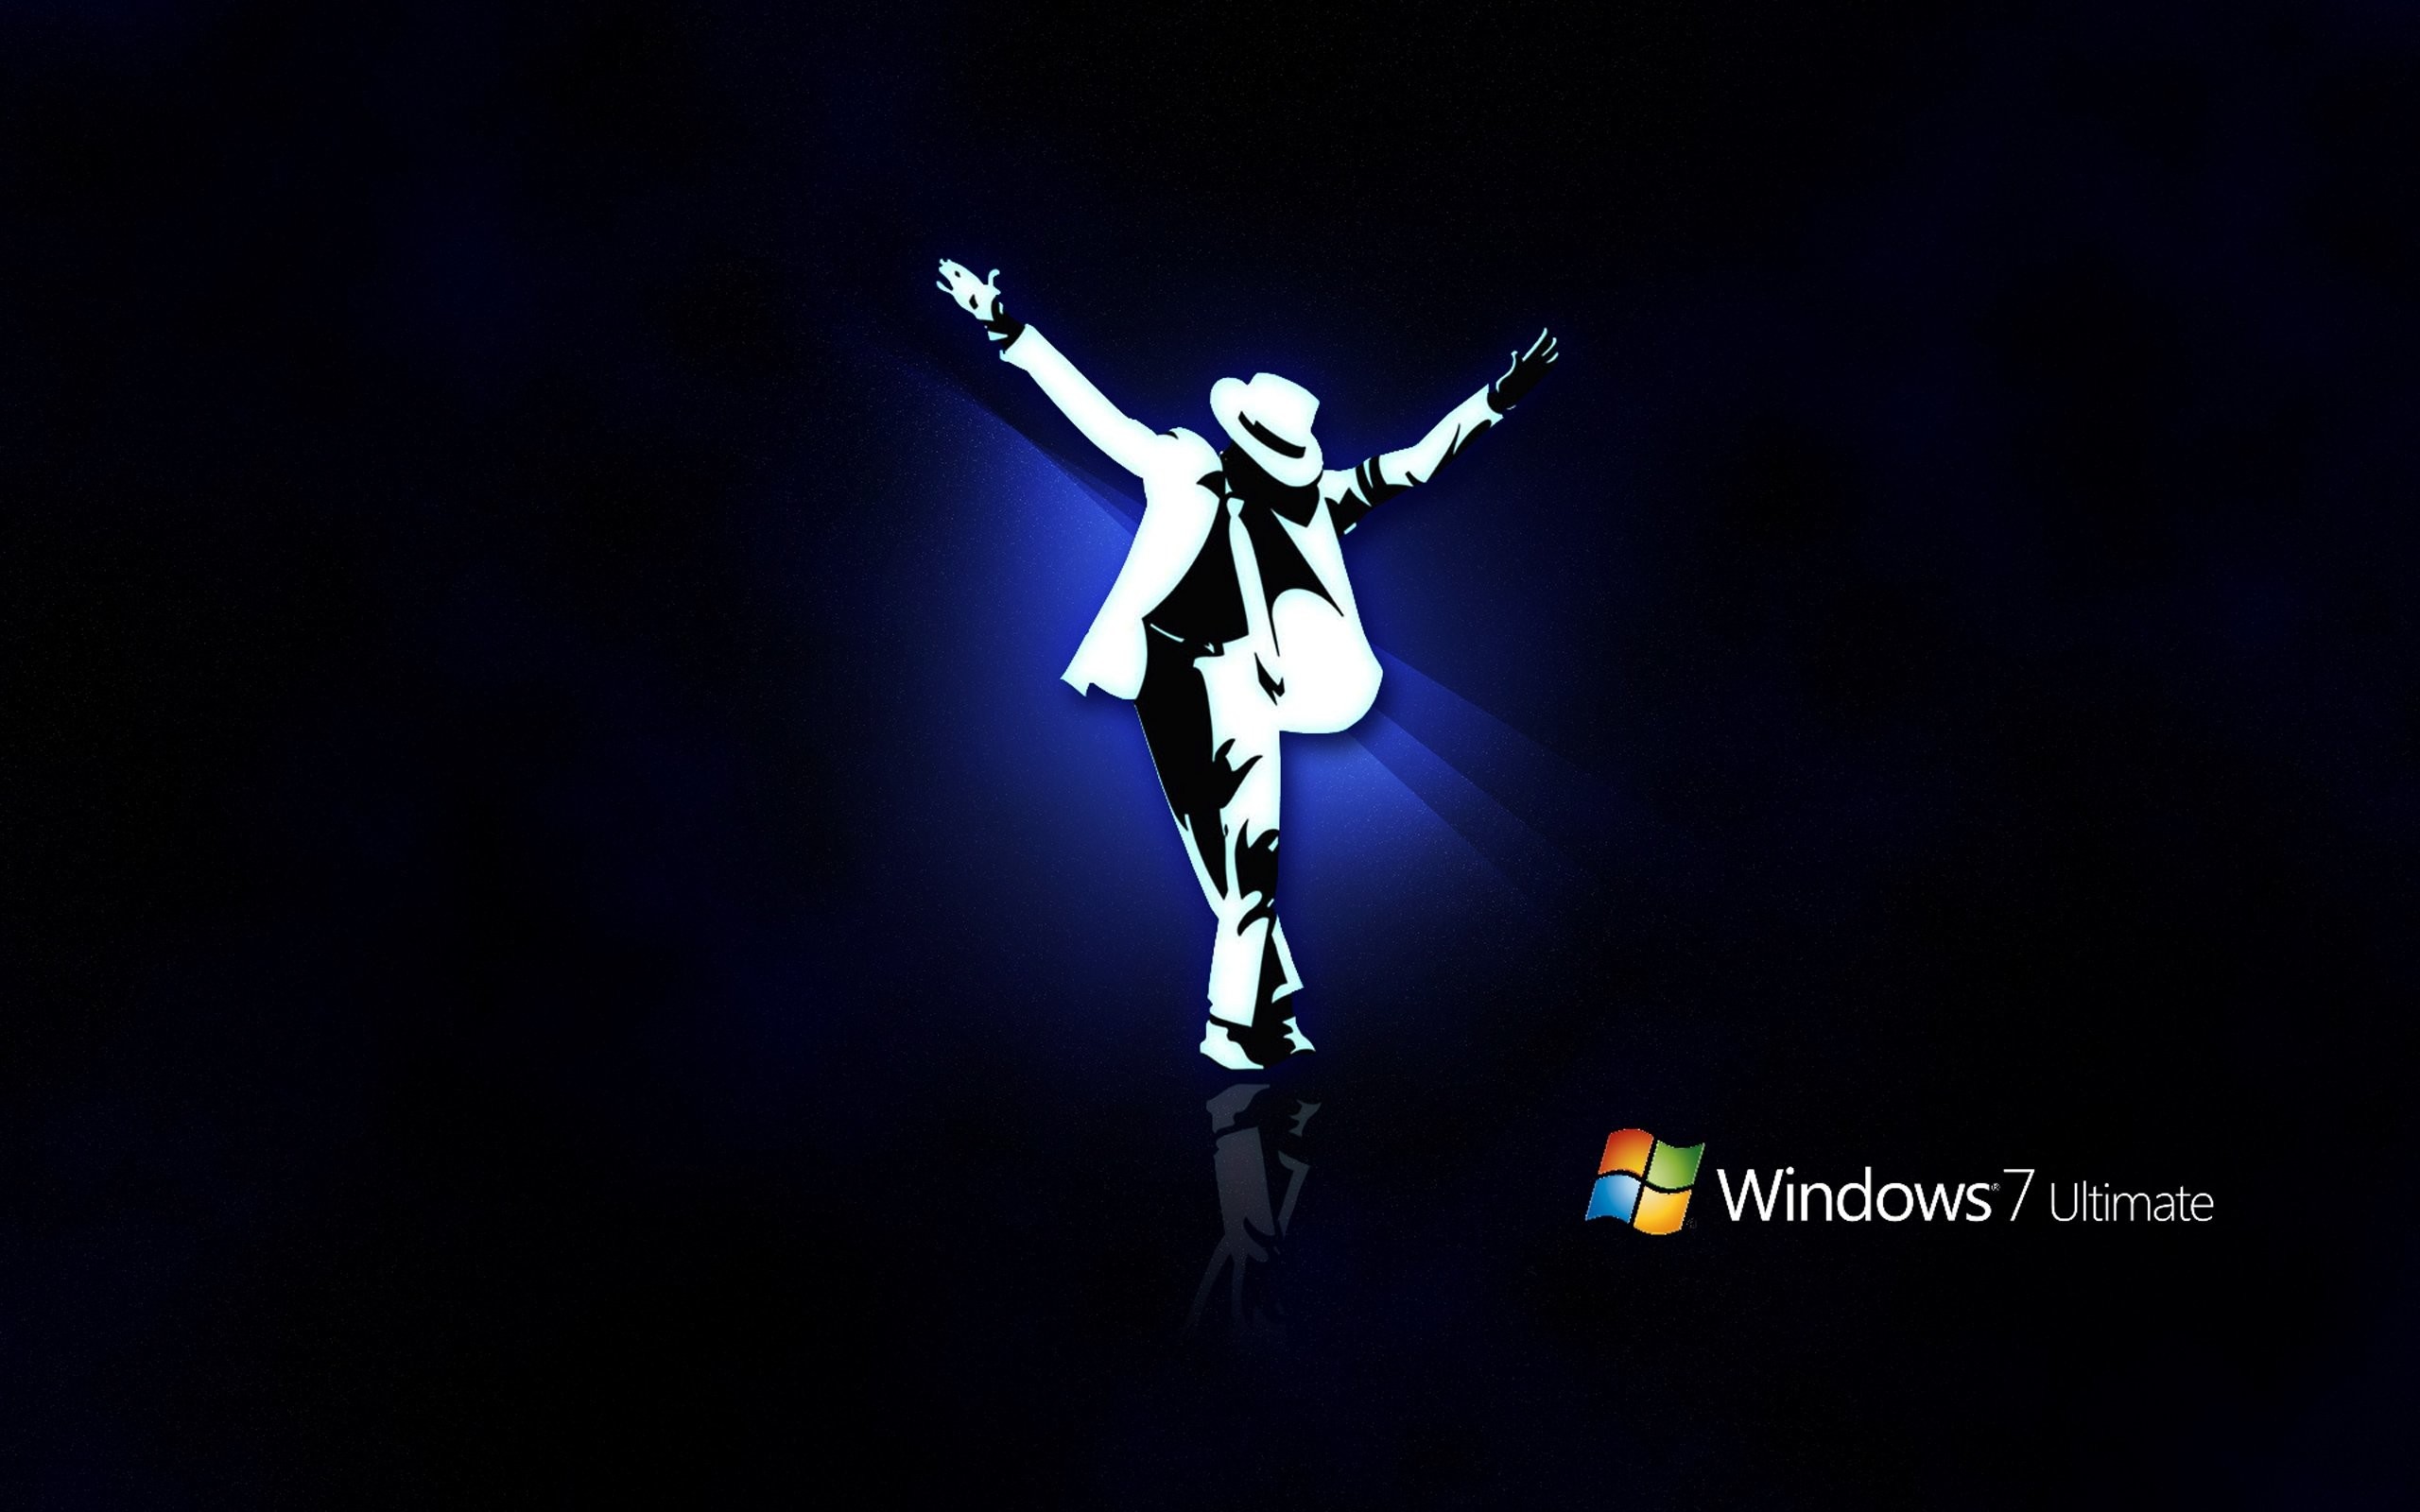 2560x1600 Desktops For Windows 7. SHARE. TAGS: Moving Active Desktop Animated Windows